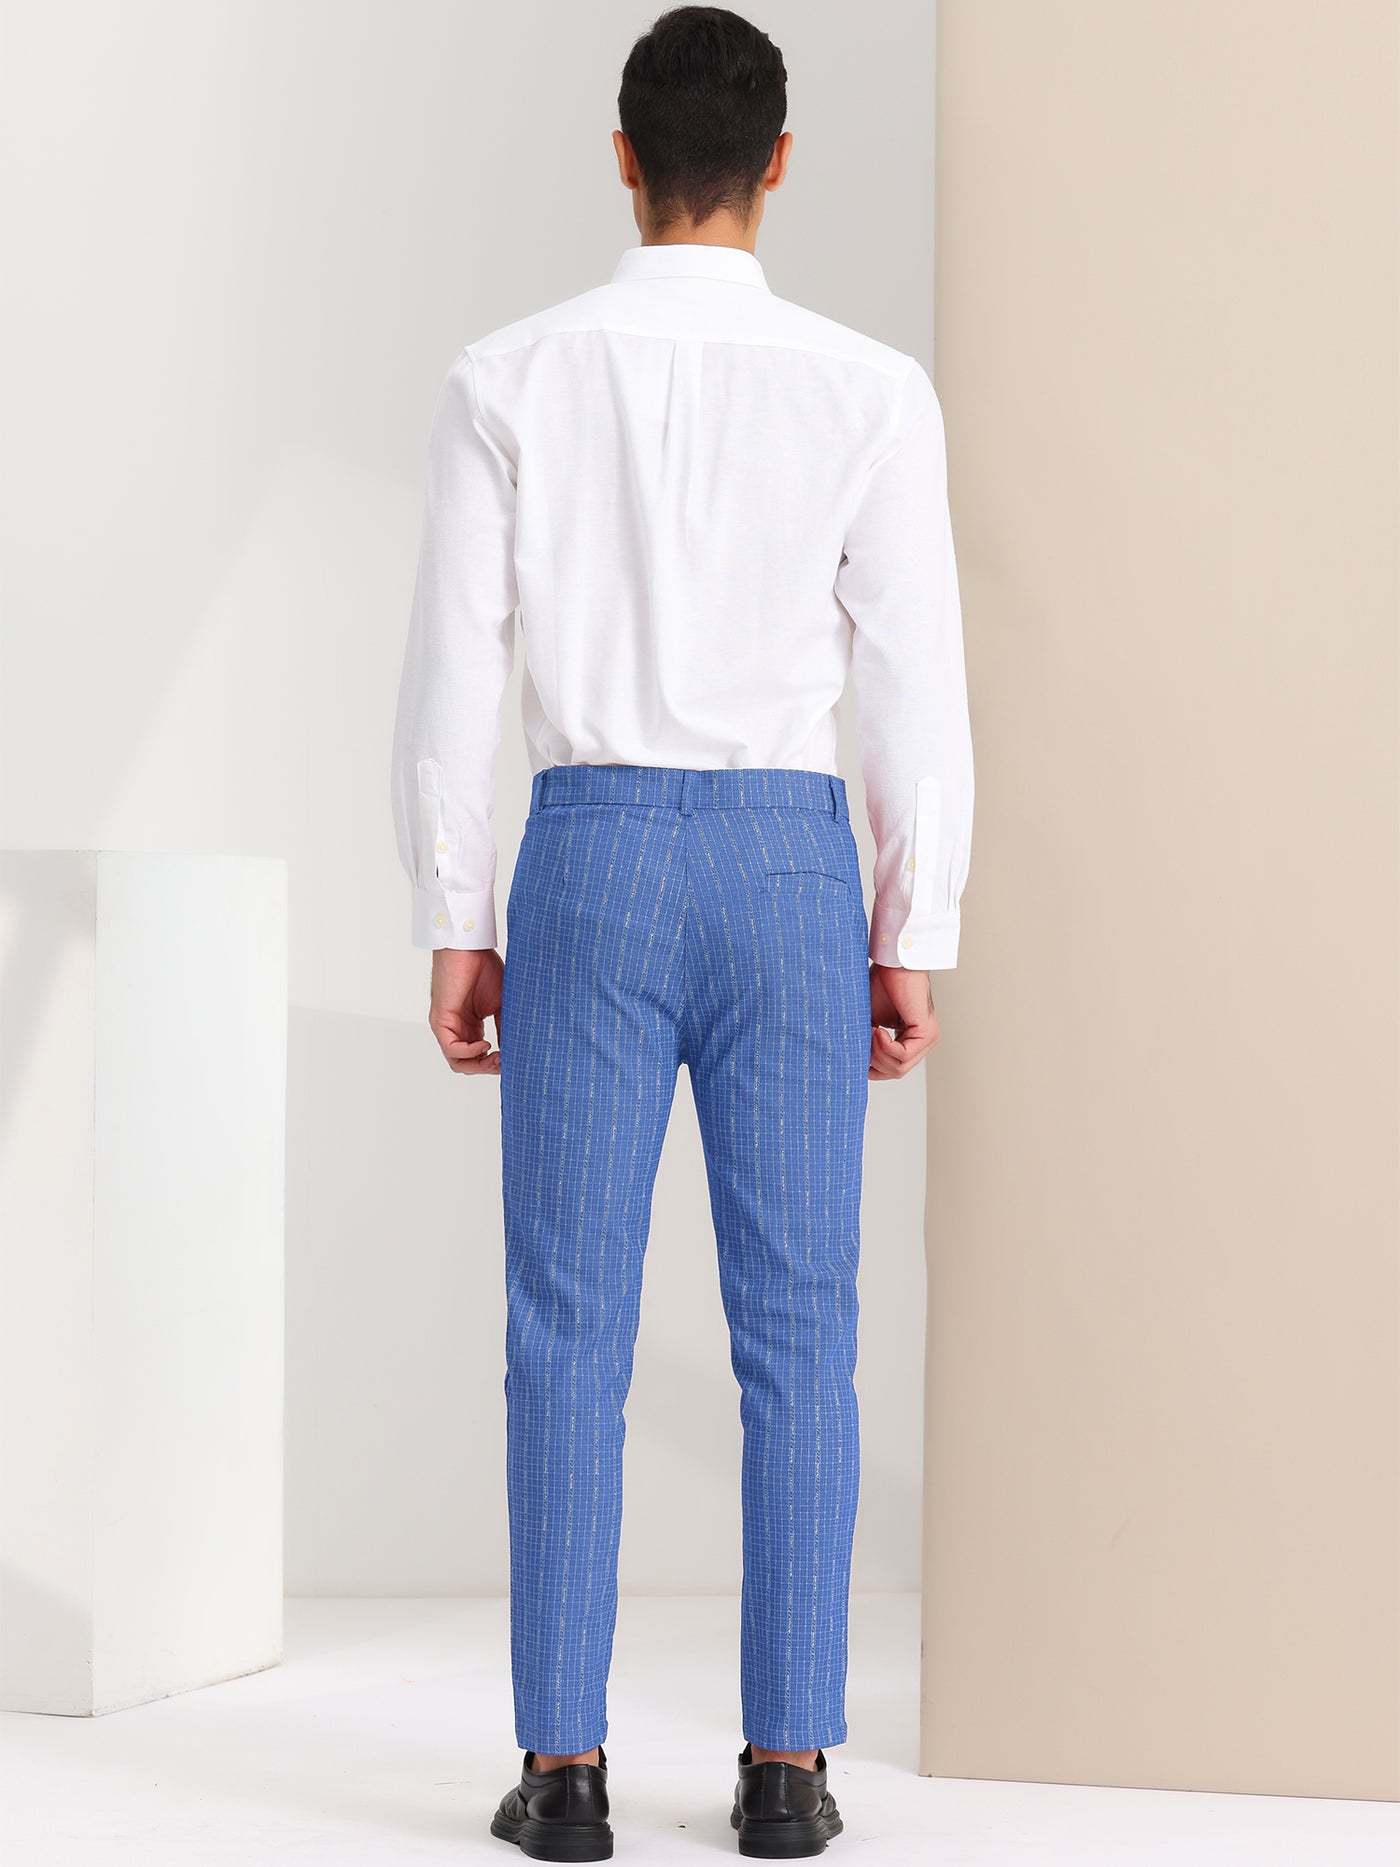 Bublédon Men's Plaid Dress Pants Slim Fit Office Prom Stripe Printed Pants